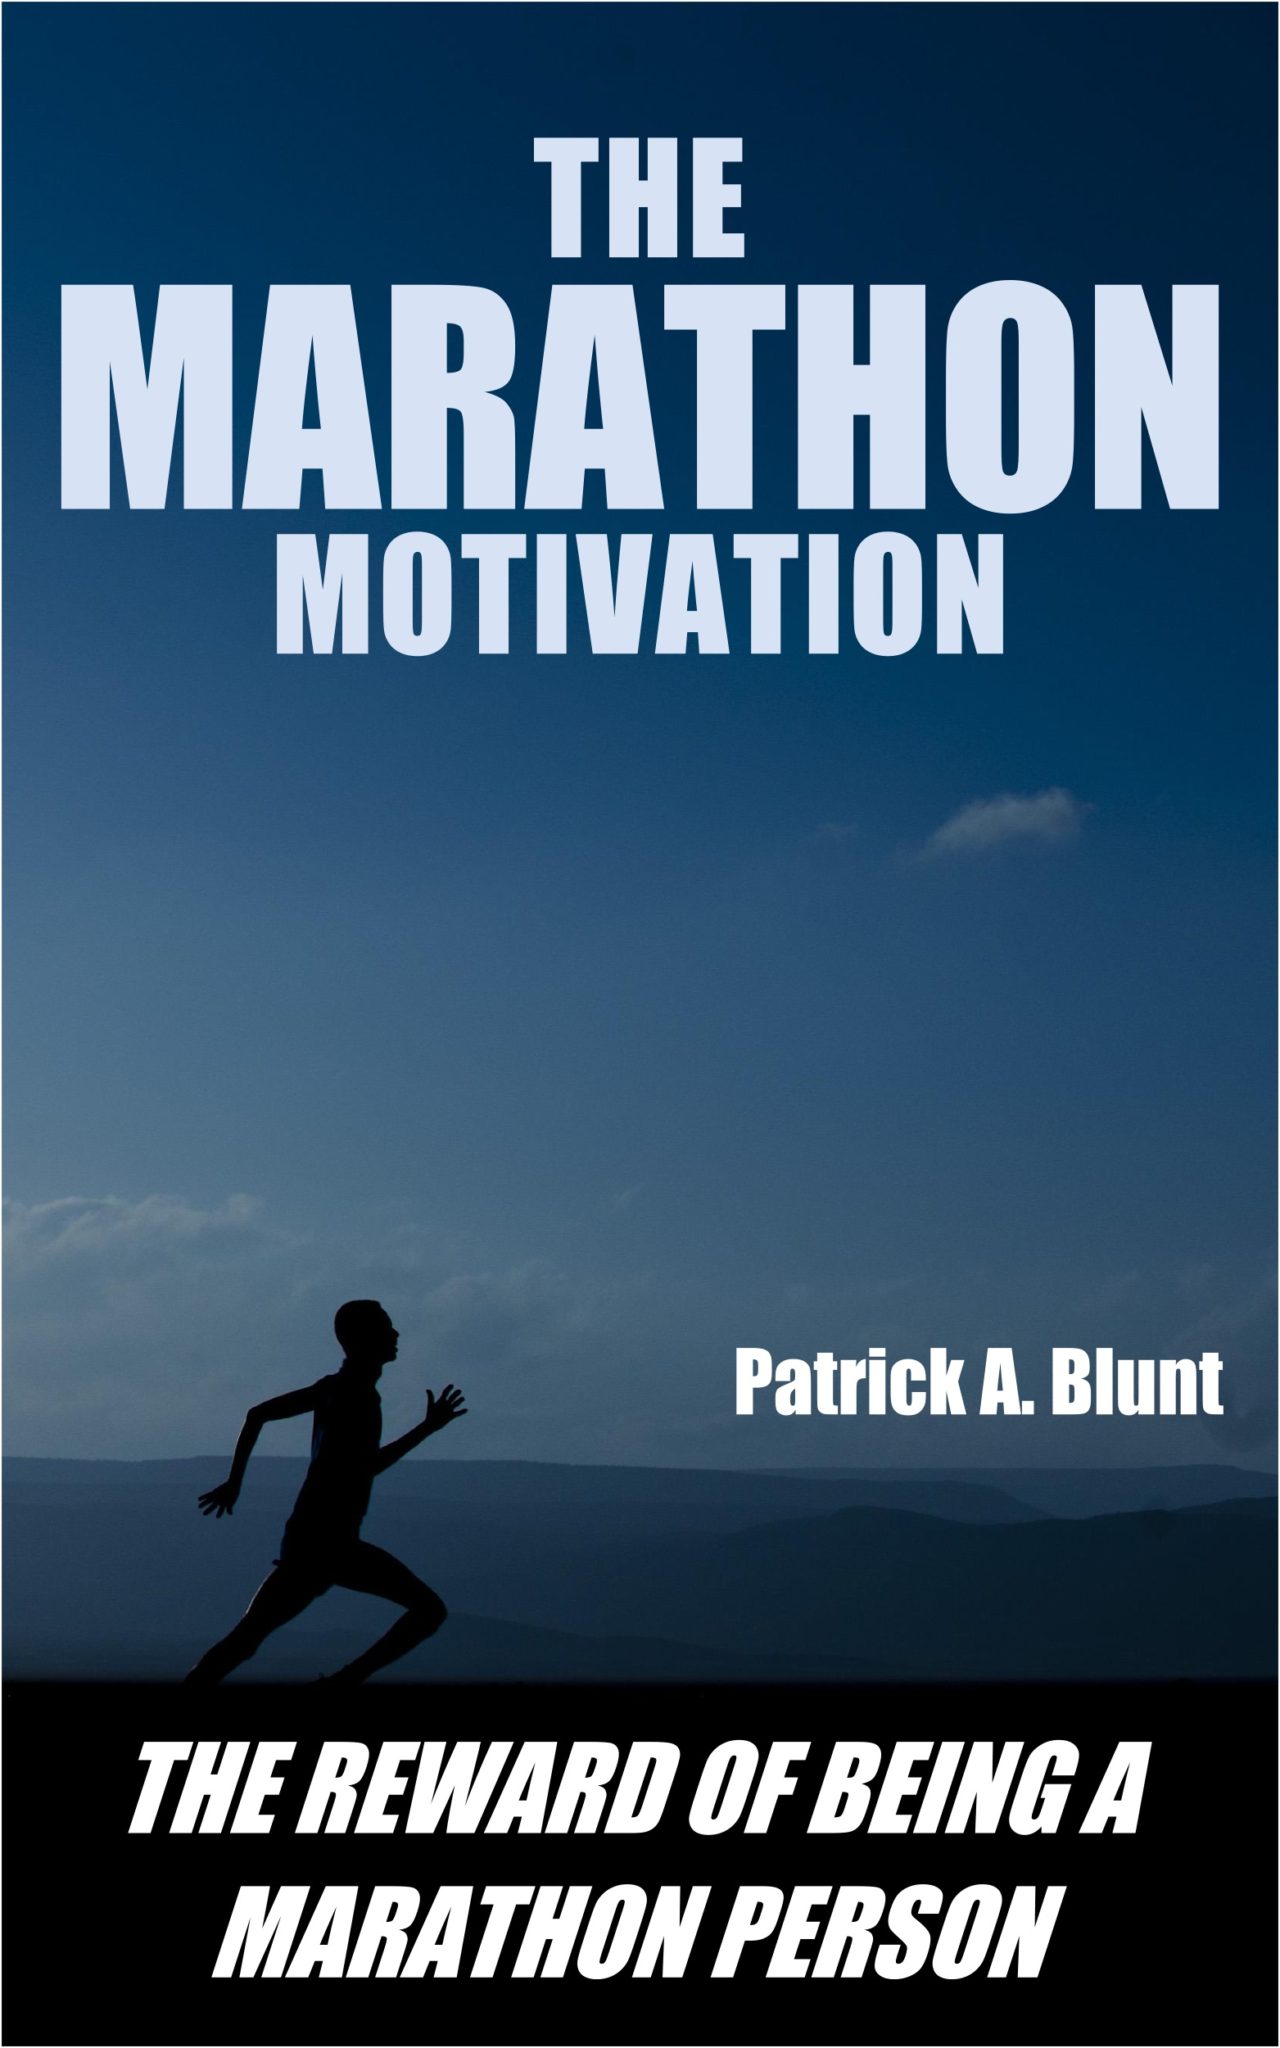 FREE: The Marathon Motivation: The Reward of Being a Marathon Person by Patrick A. Blunt